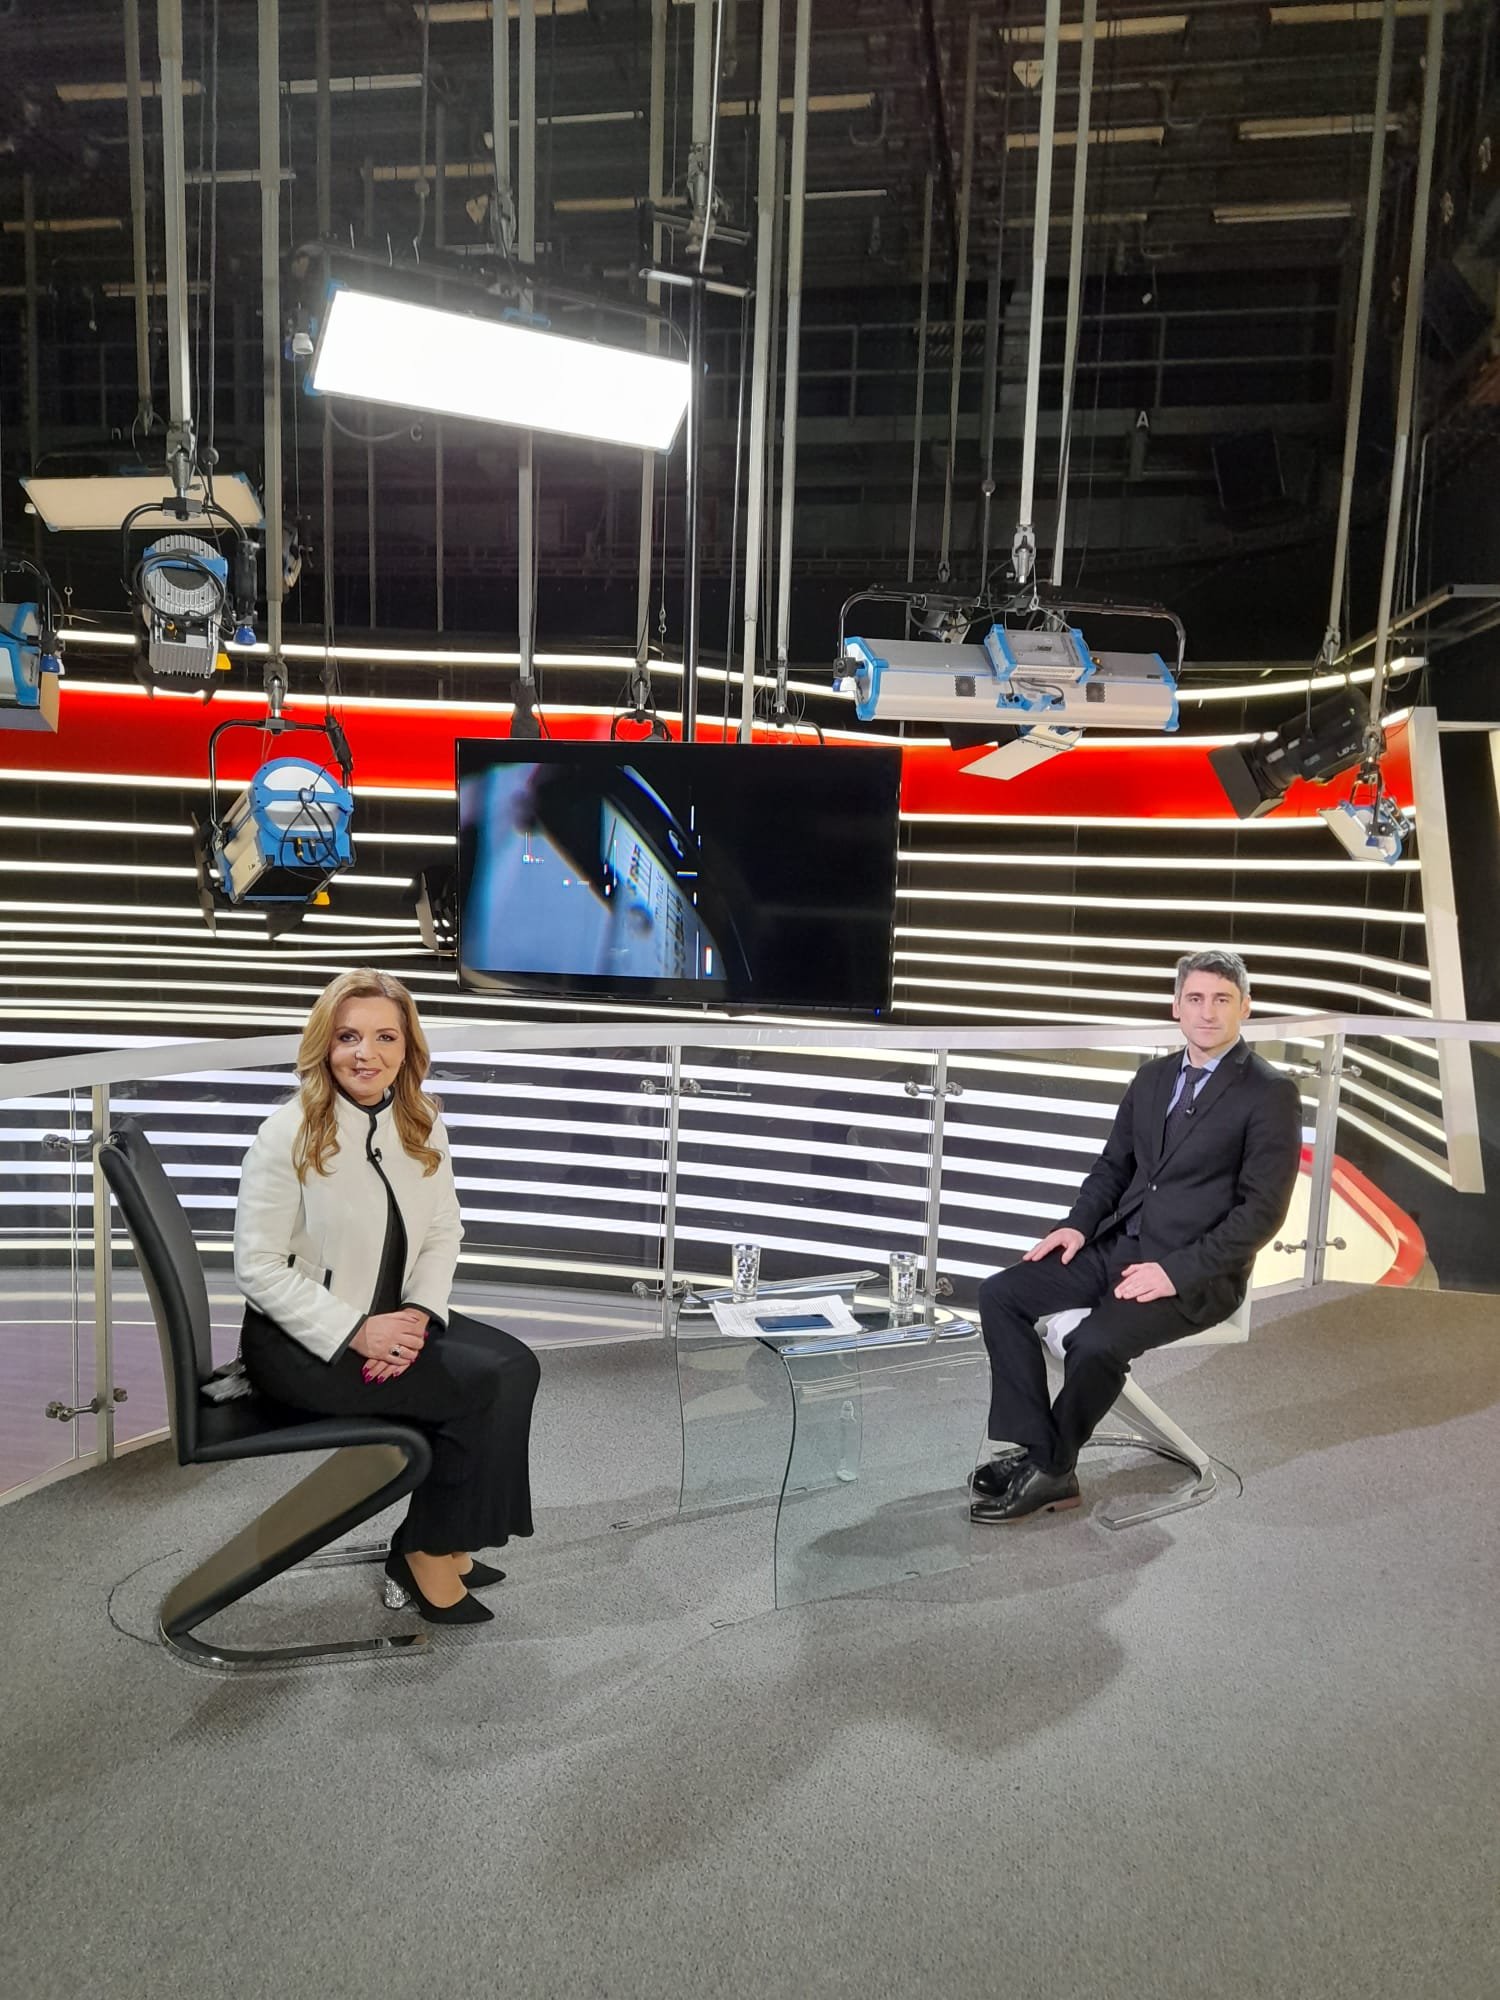 Octavian was interviewed at the Romanian Public TV (TVR1) show "Beyond white and black" / "Dincolo de alb si negru", with Mihaela Craciun